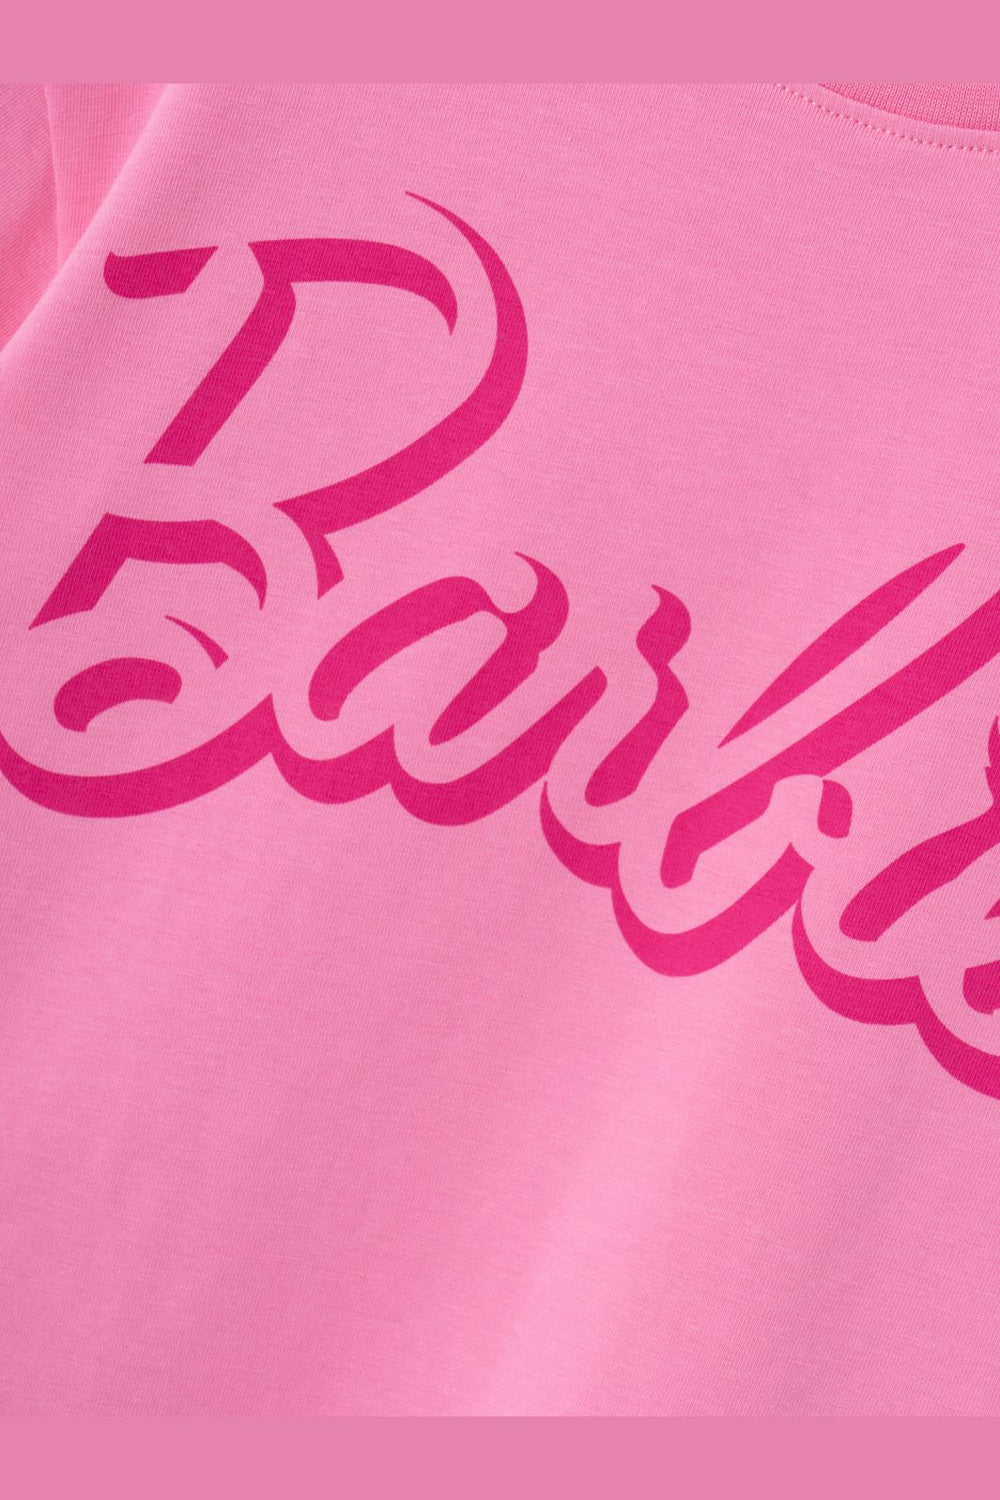 Name It - Nkfdalina Barbie Ss Nreg Top Sky - 4559839 Pink Cosmos